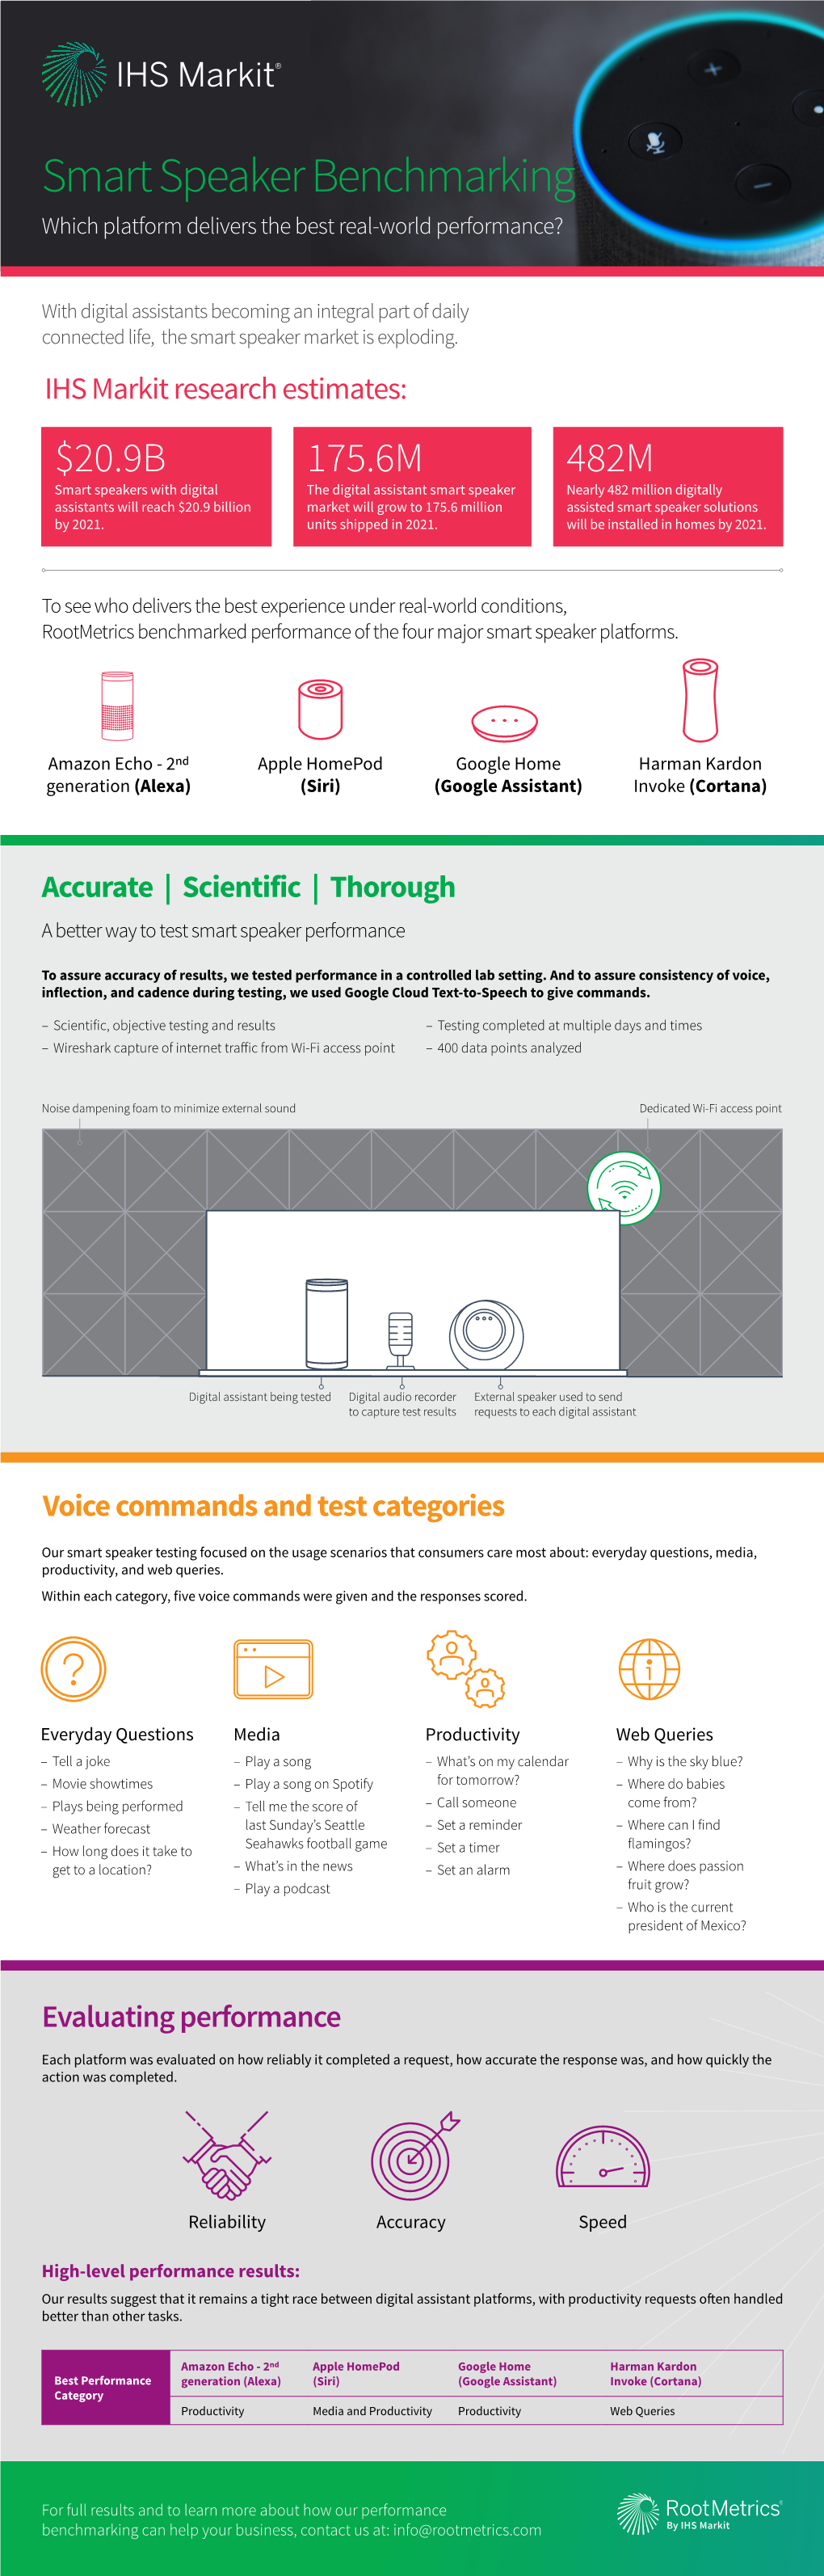 Smart Speaker Benchmarking Which Platform Delivers the Best Real-World Performance?